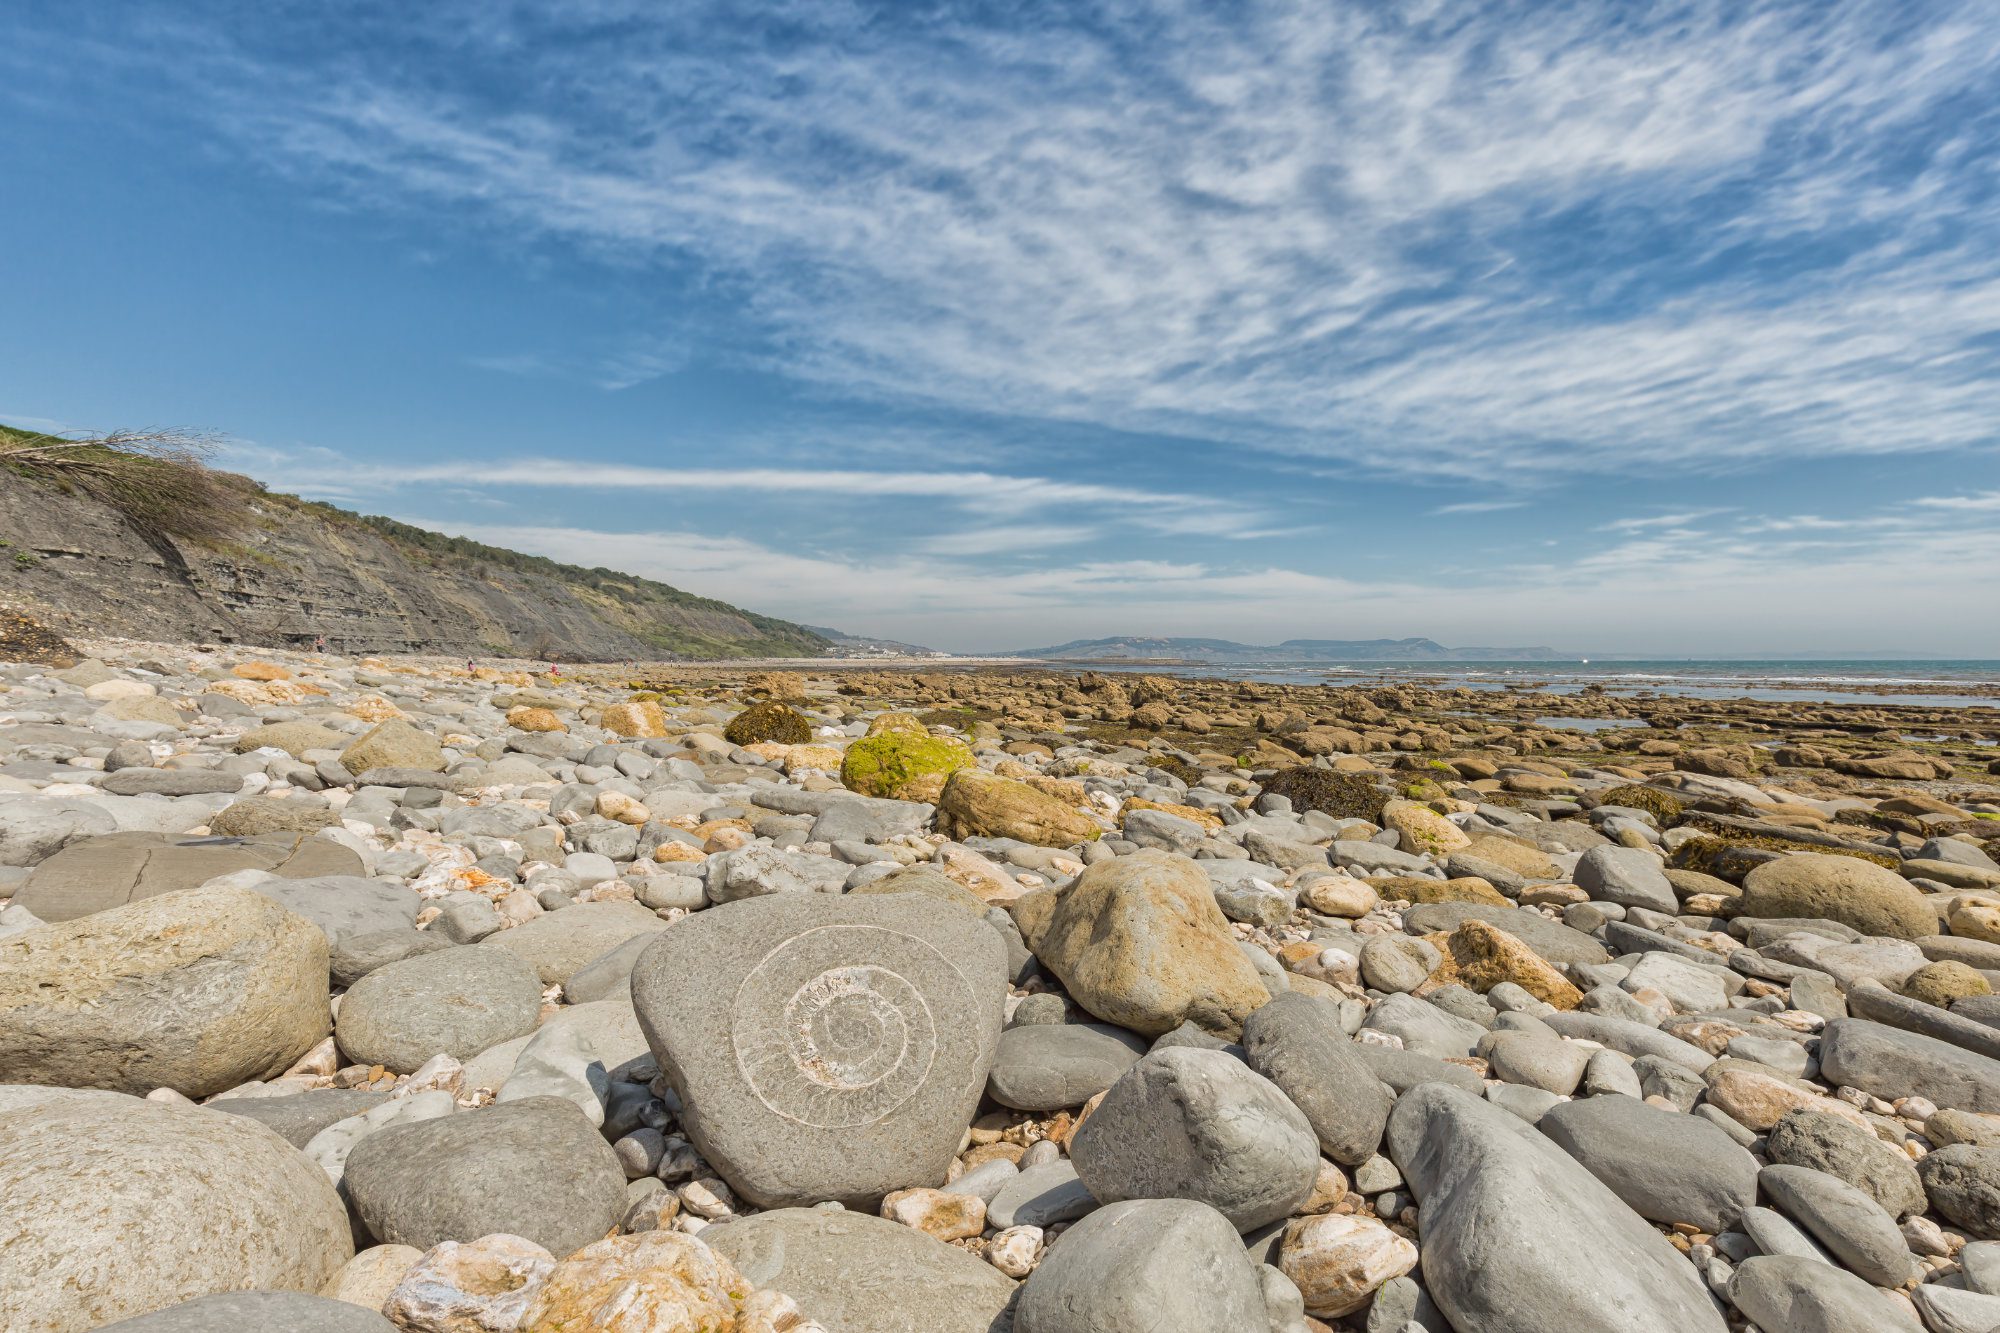 An amonite on a beach close to Lyme Regis